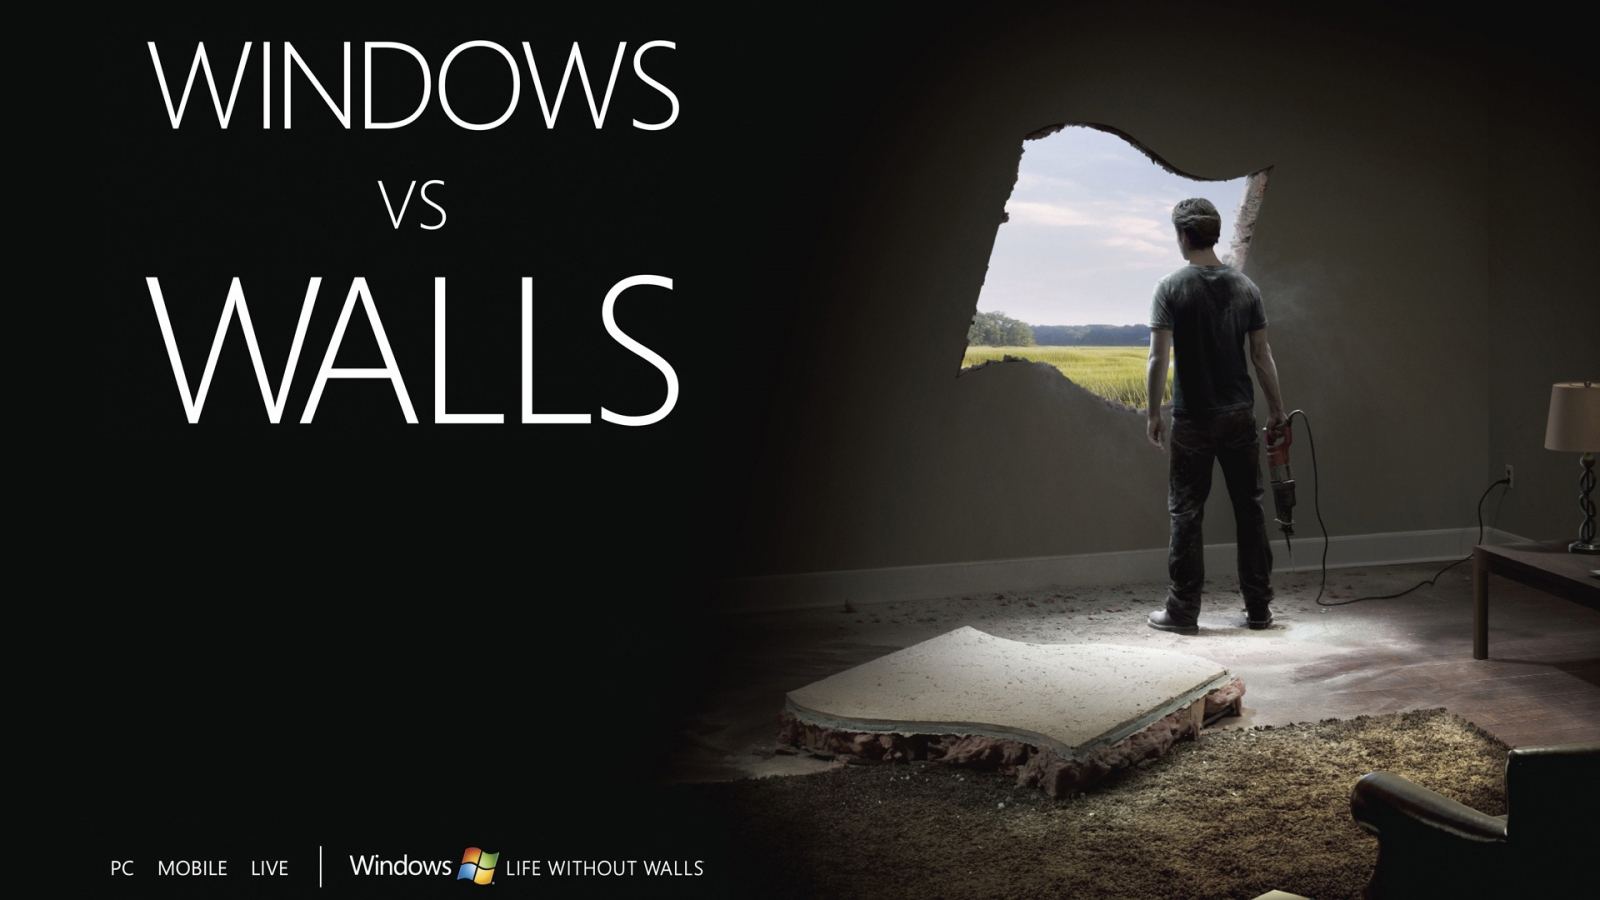 Windows vs Walls for 1600 x 900 HDTV resolution